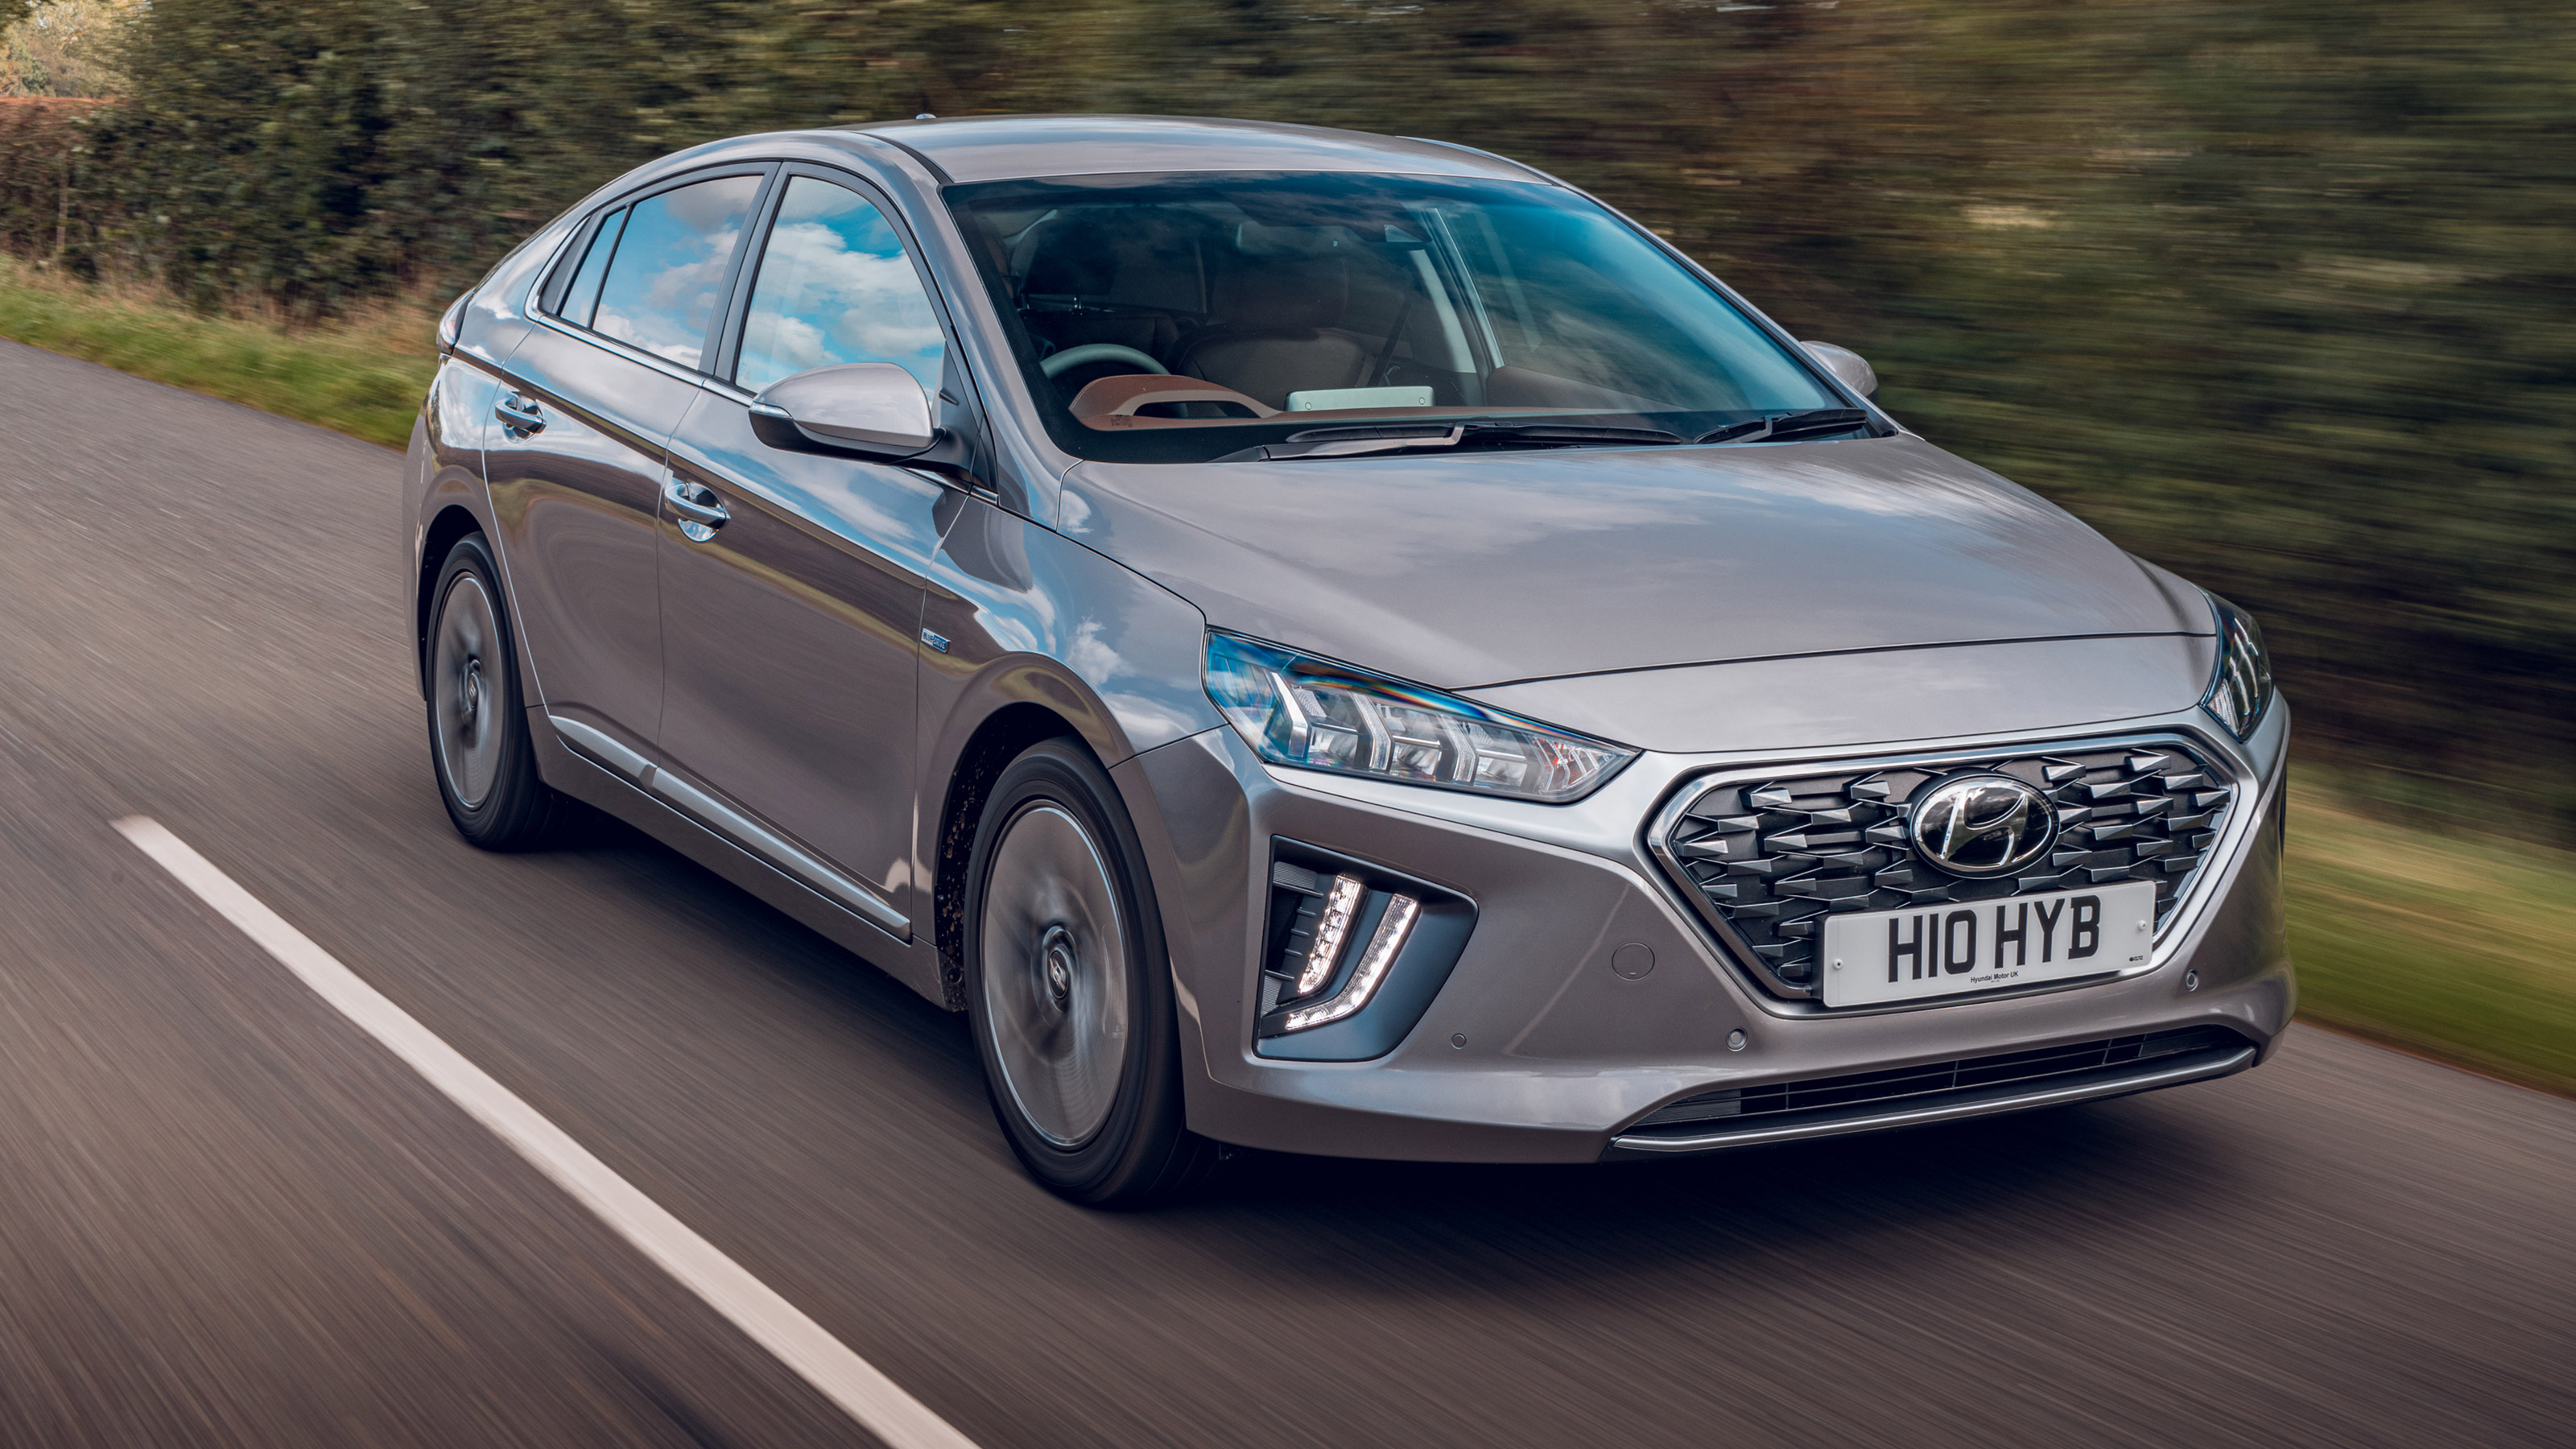 2017 Hyundai Ioniq Electric Review & Ratings